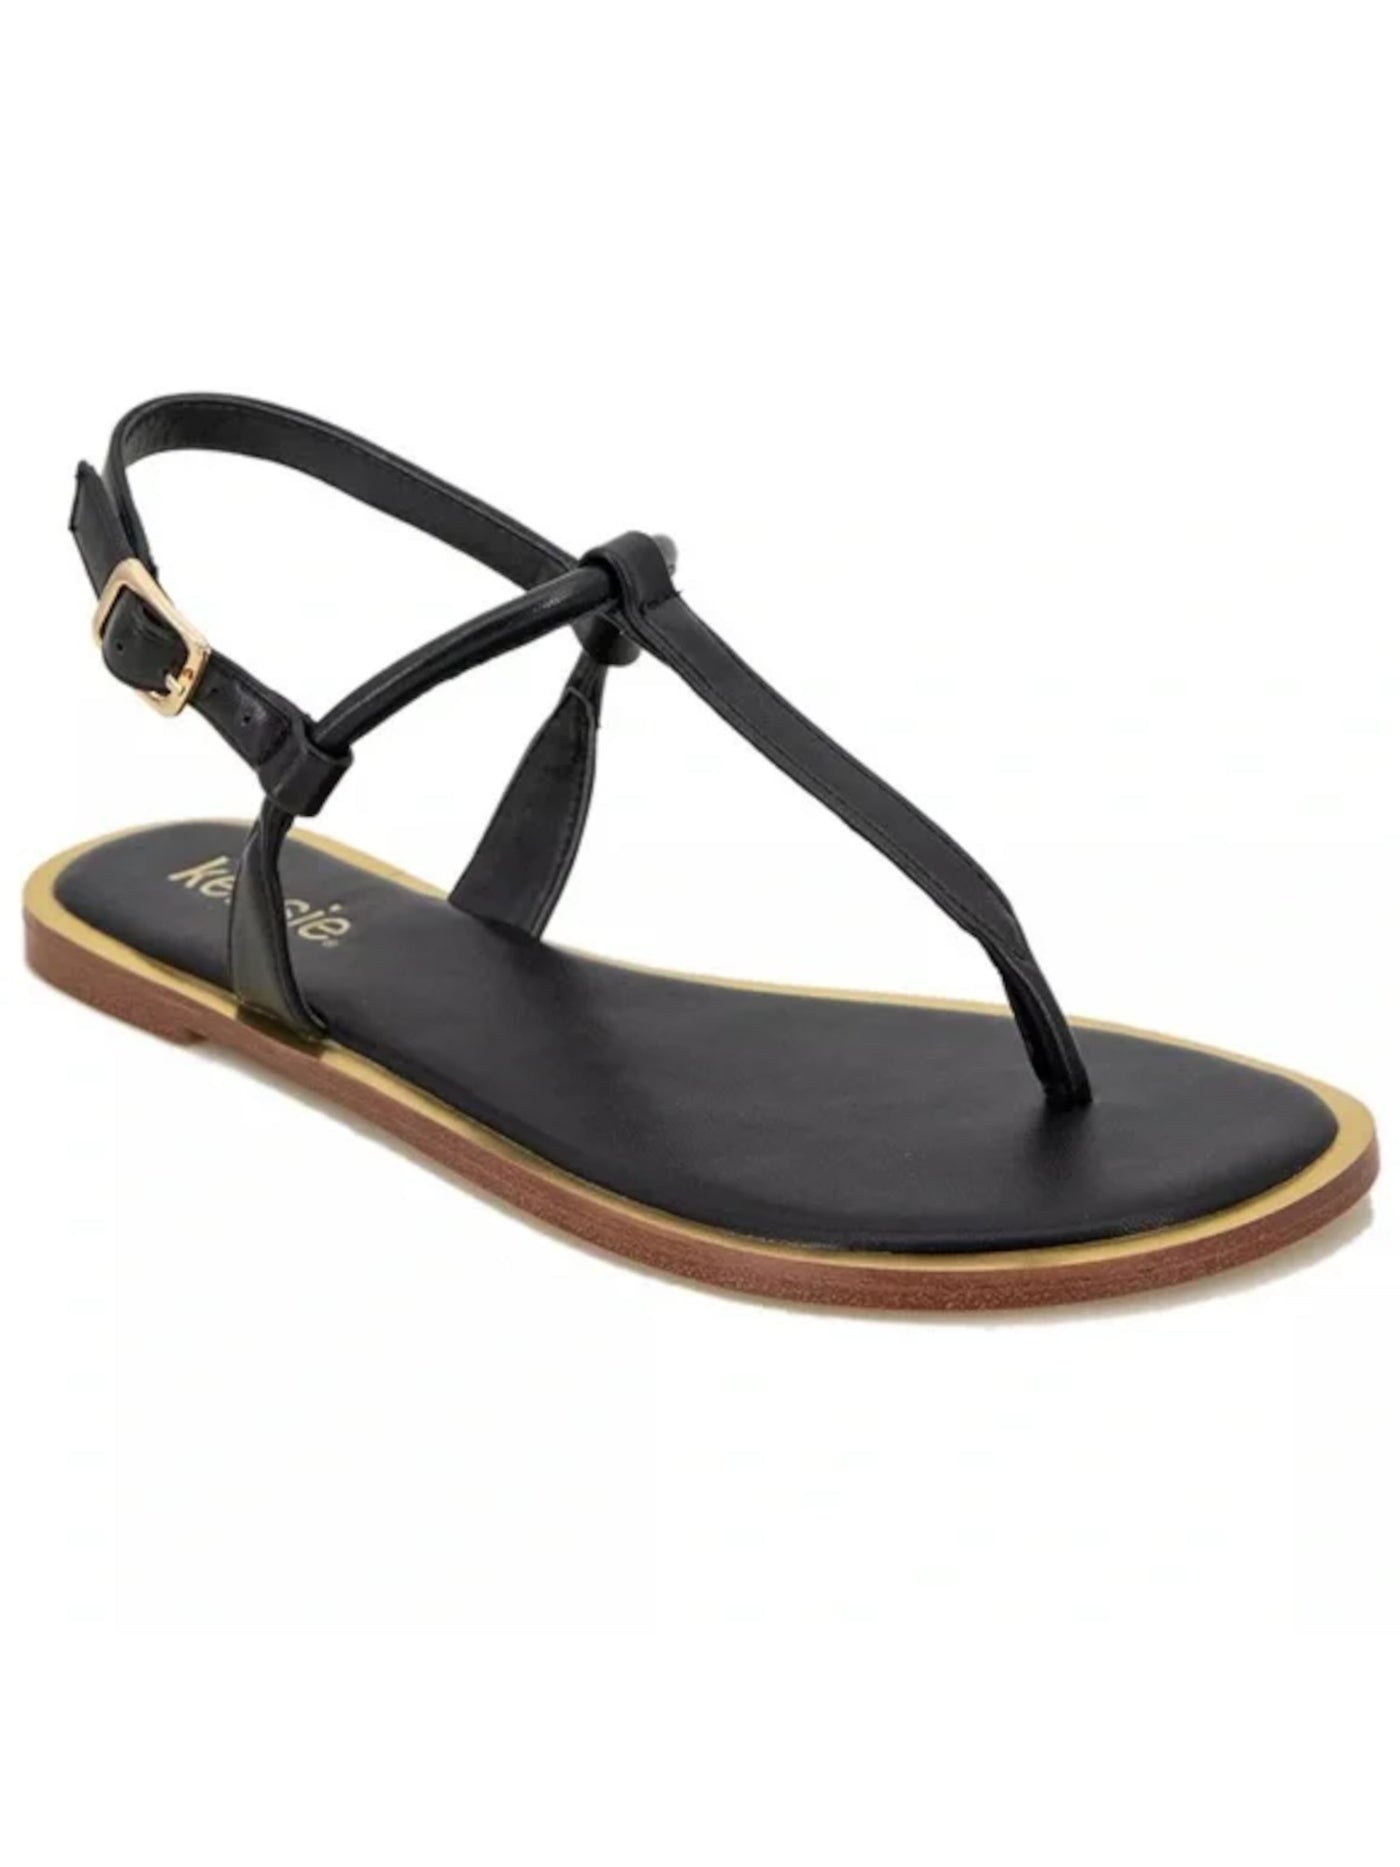 KENSIE Womens Black Color Block T-Strap Padded Bradie Open Toe Buckle Thong Sandals Shoes 10 M